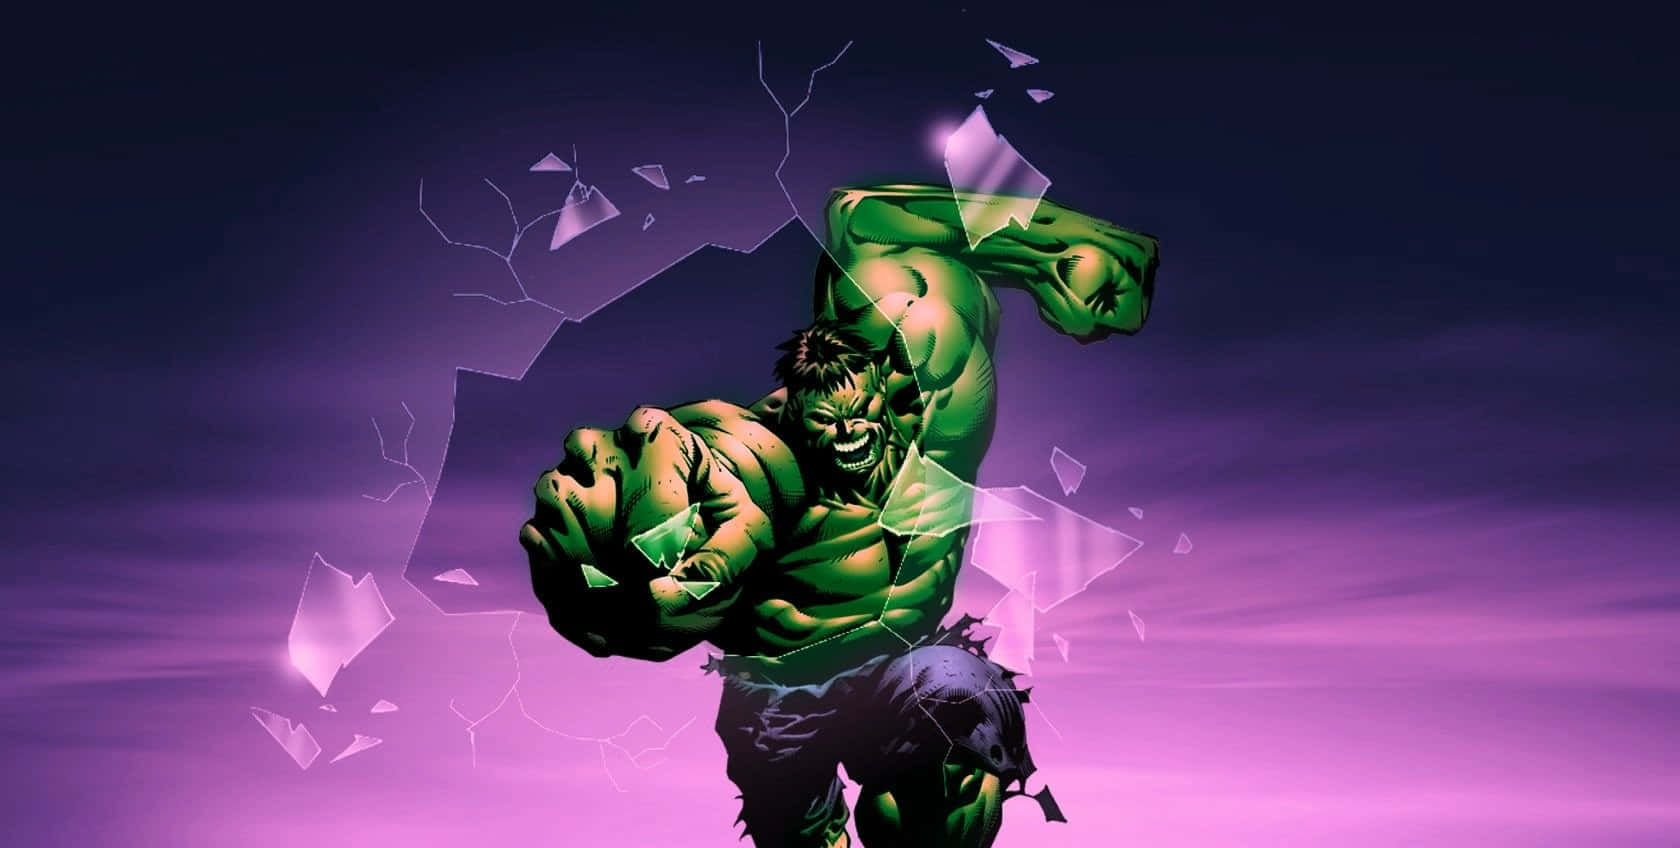 Hulk is ready to unleash his rage